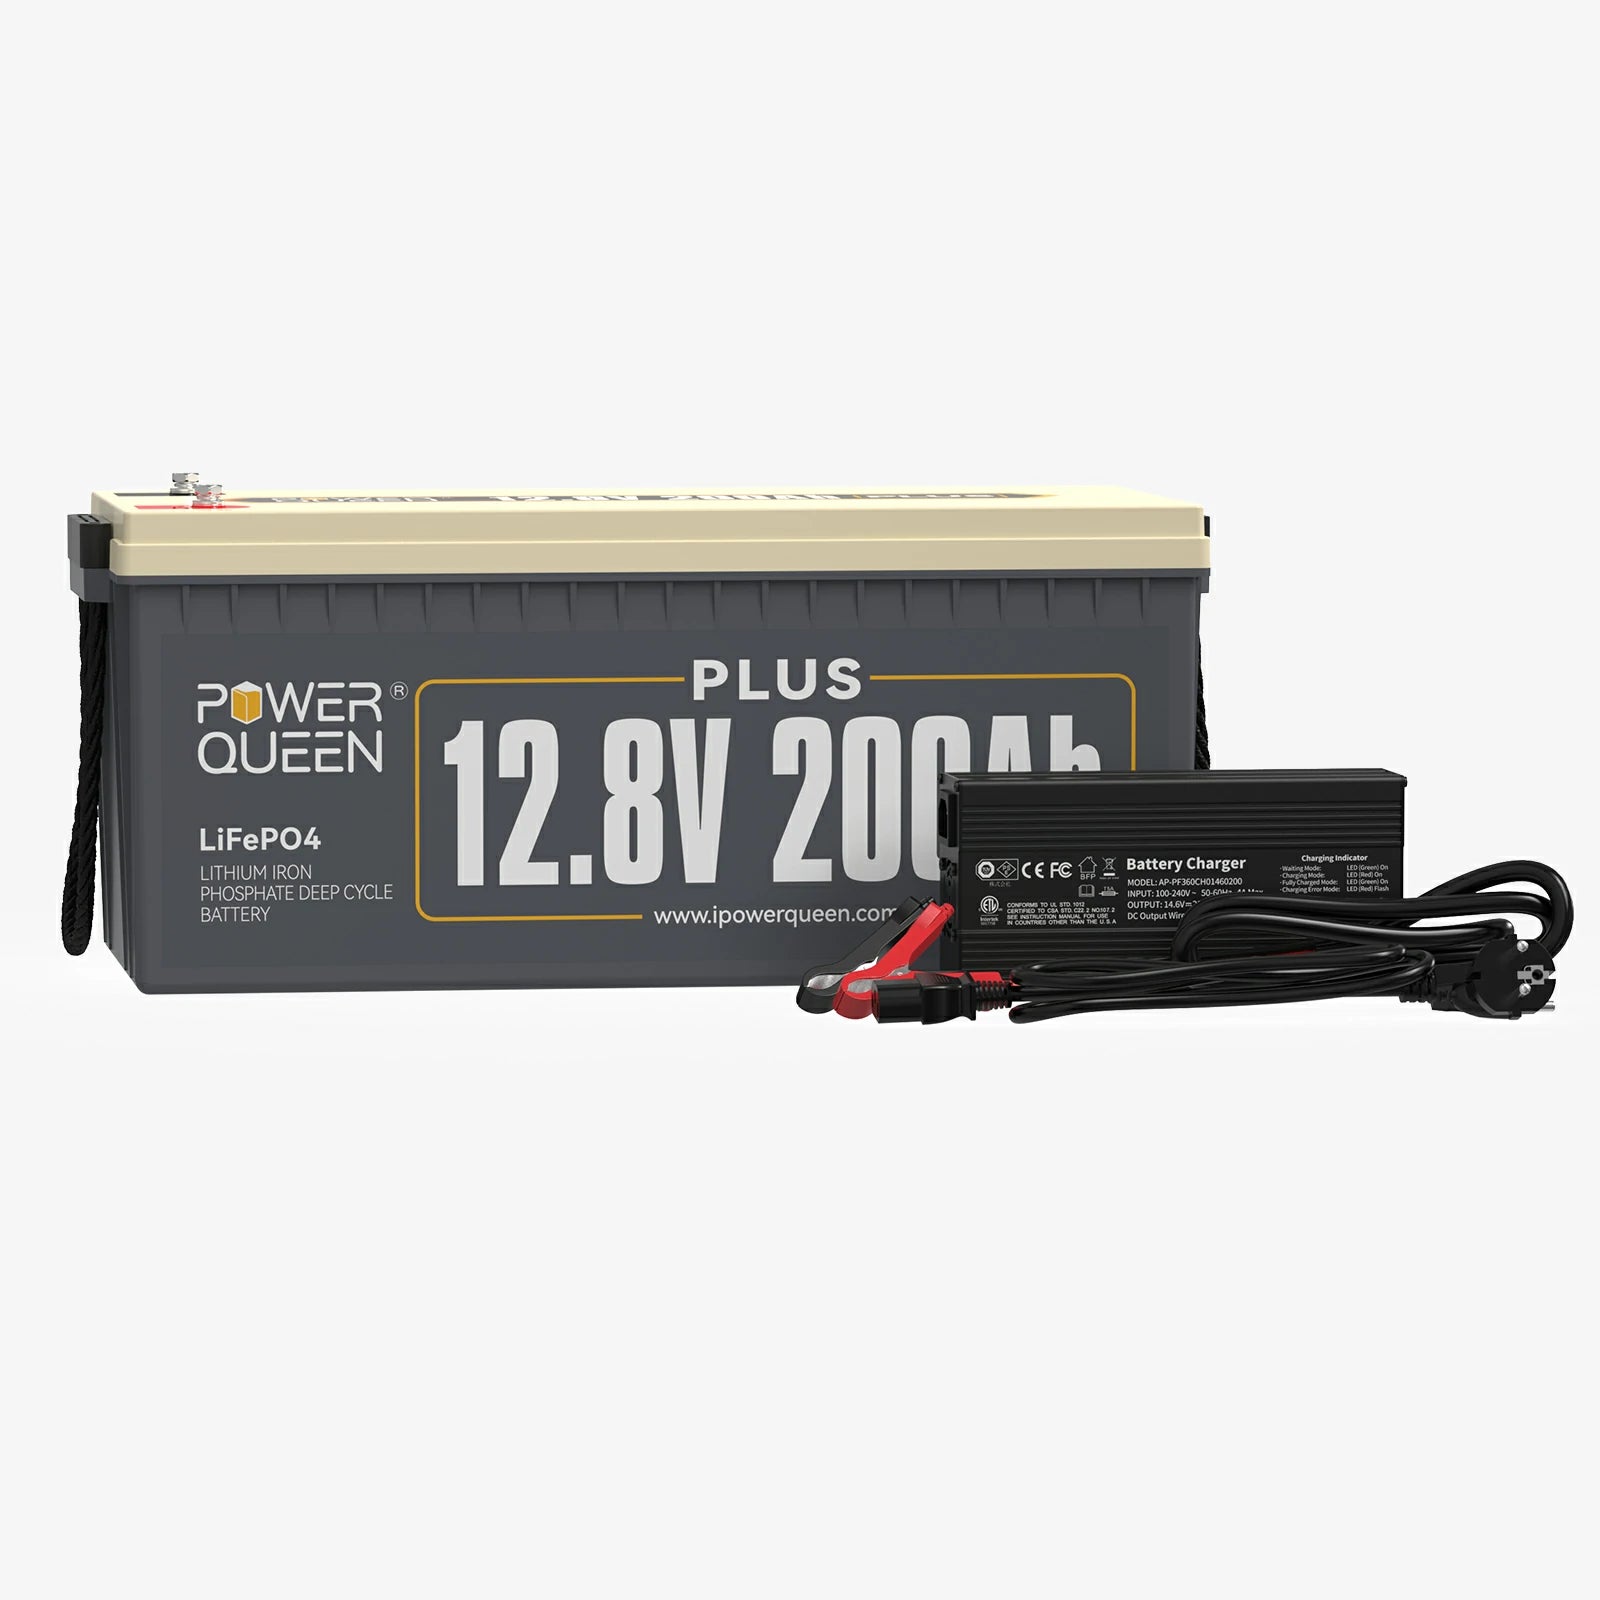 Power Queen 12V 100Ah Heated LiFePO4 Battery, Near-Identical Inside? 